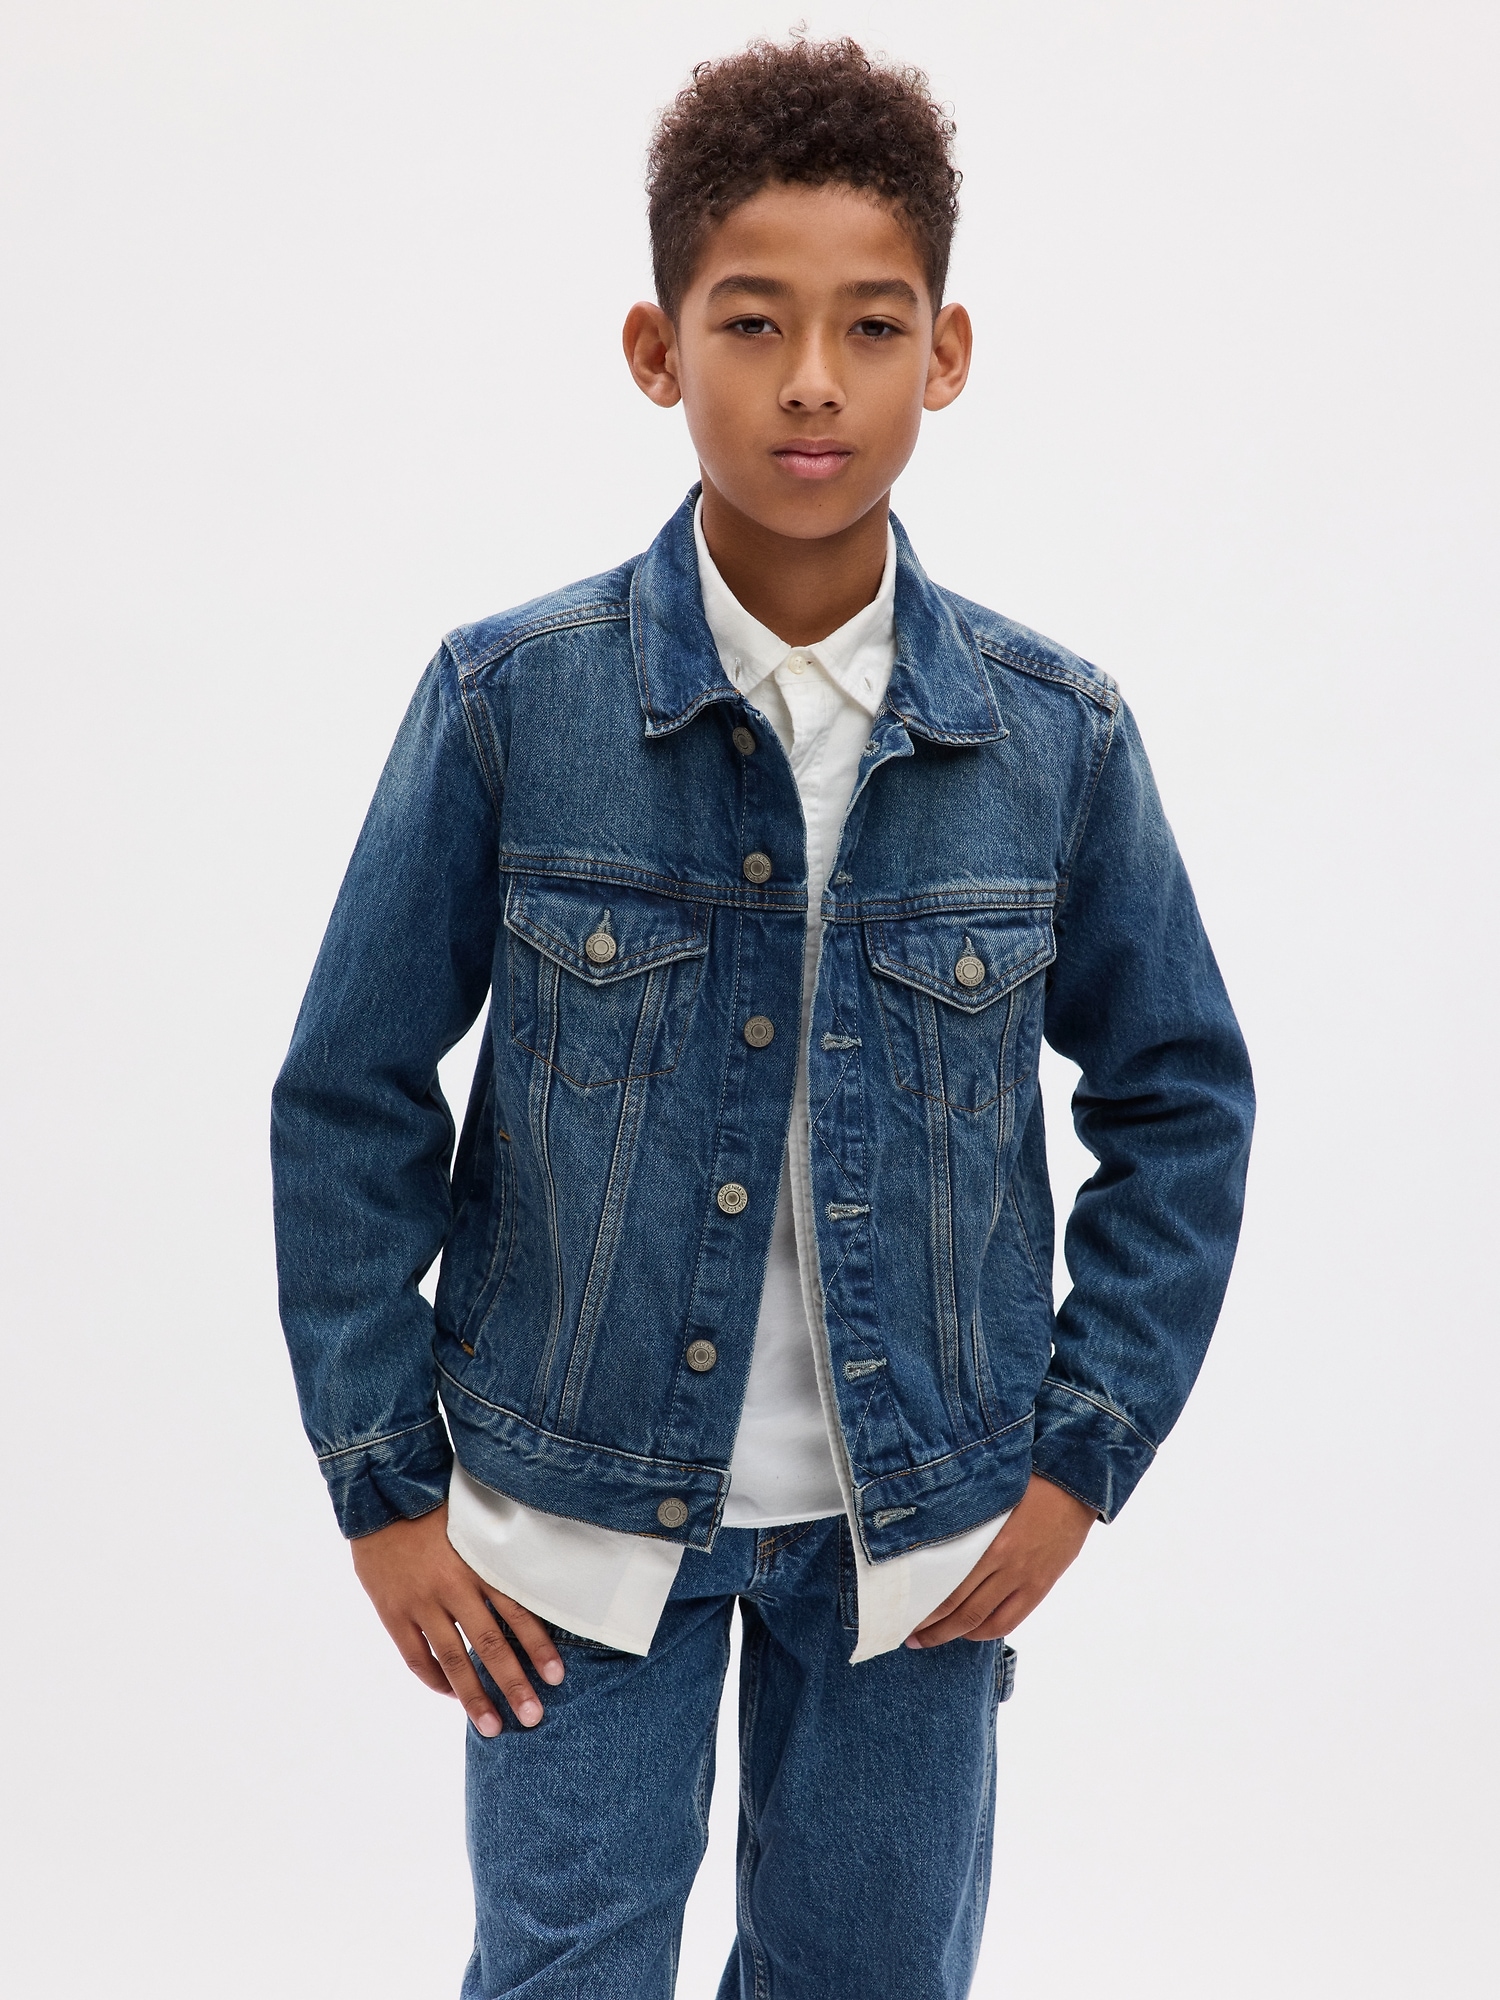 Kids Denim Jacket Boys Jean Coat Clothing Fashion | Baby Boy Denim Jacket  Children - Jackets & Coats - Aliexpress